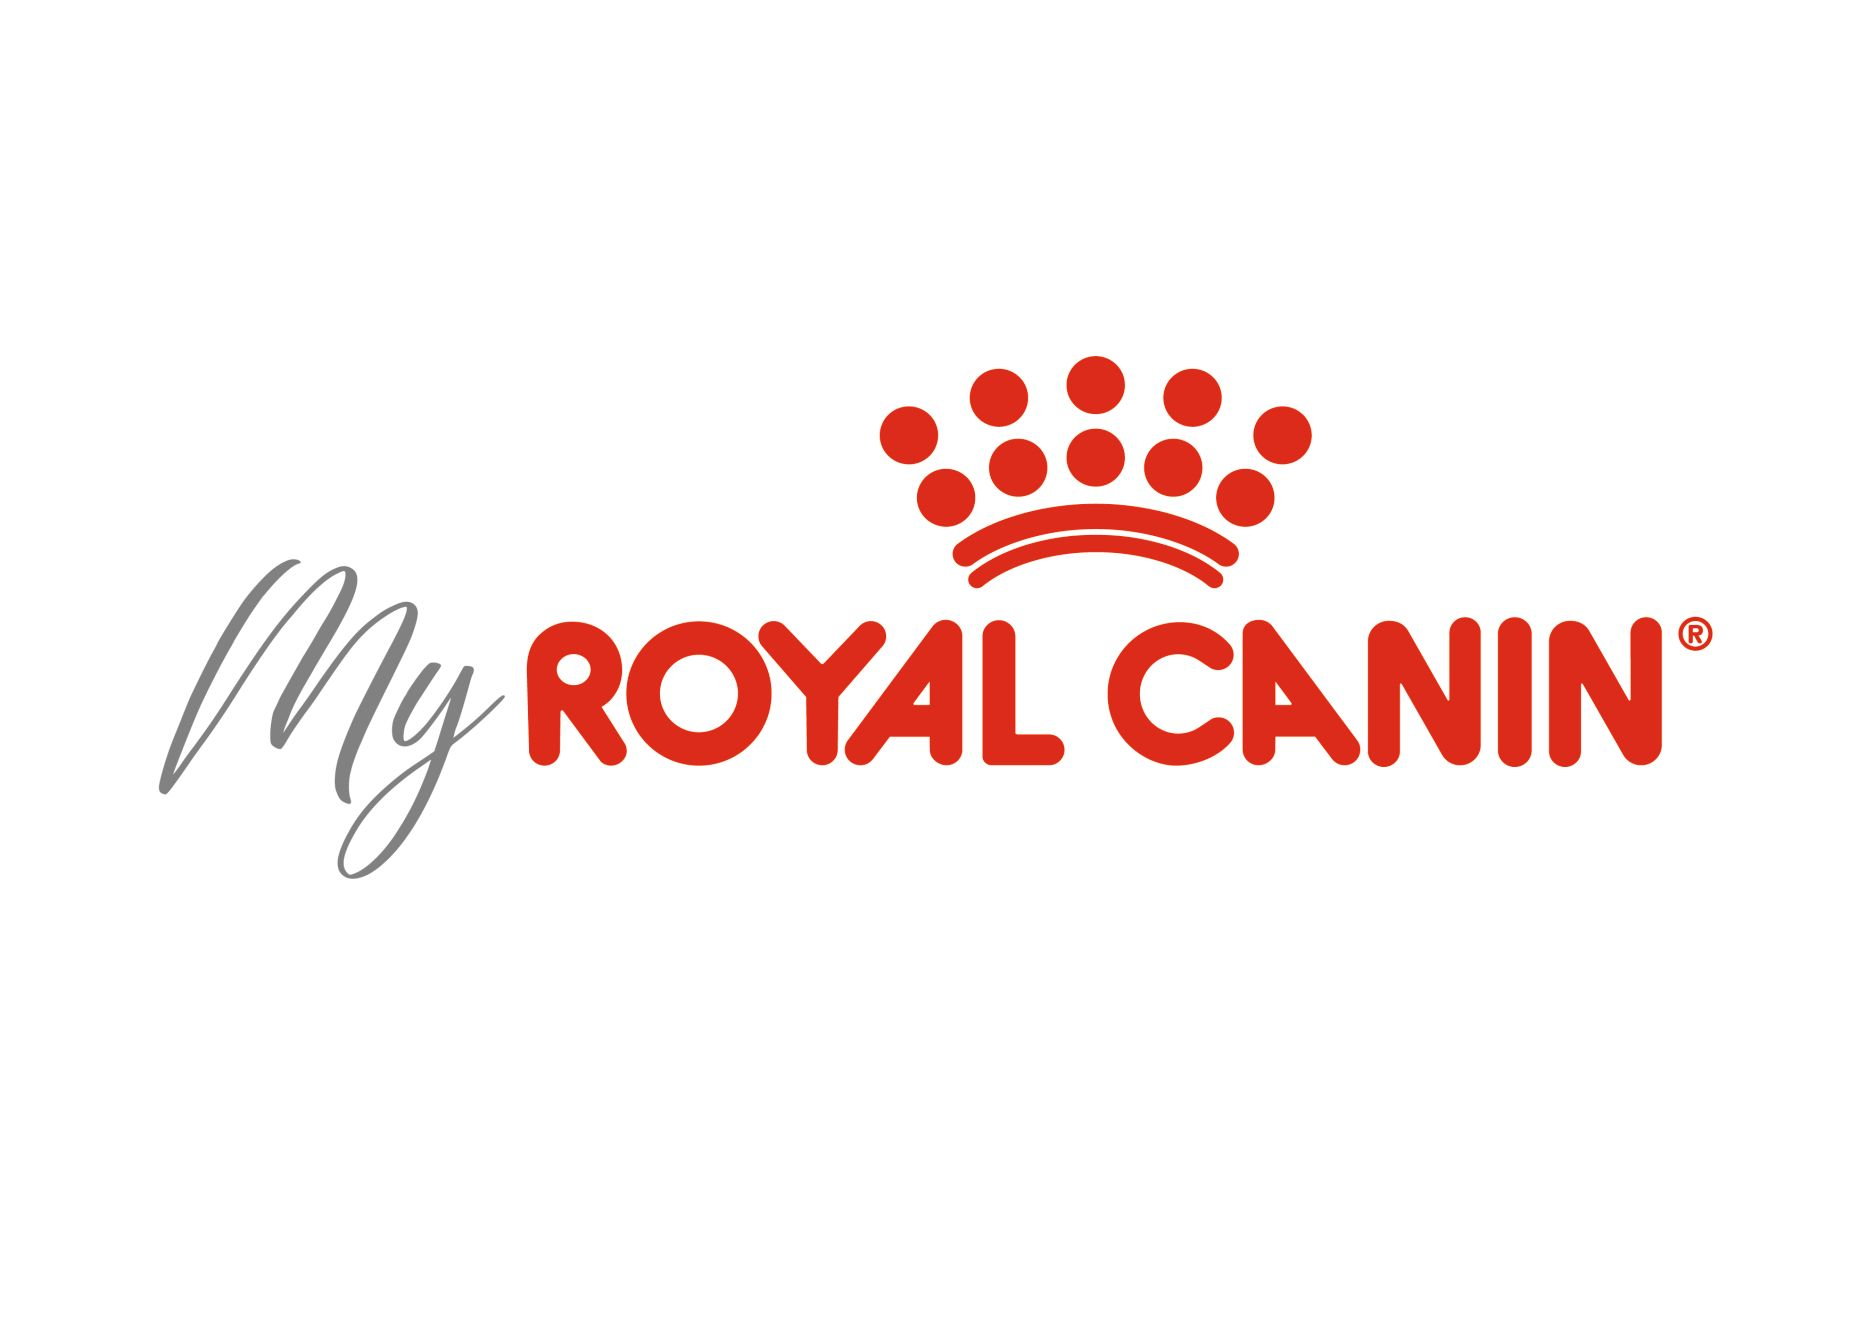 My Royal Canin logo